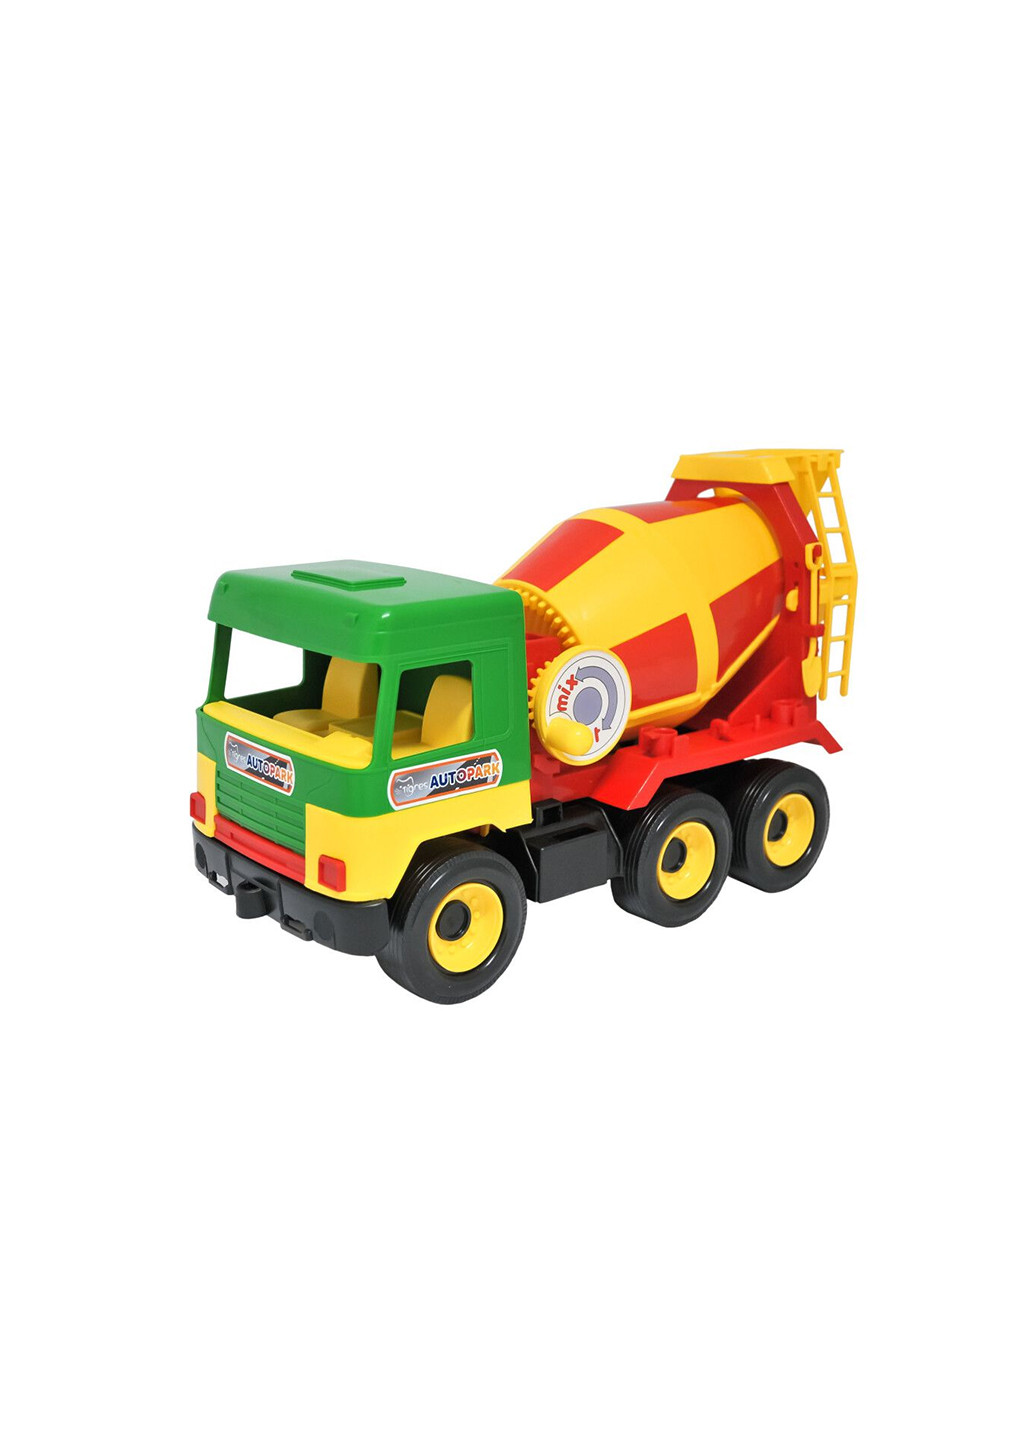 Іграшка машинка бетонозмішувач "Middle truck" 39223 Wader (257452015)